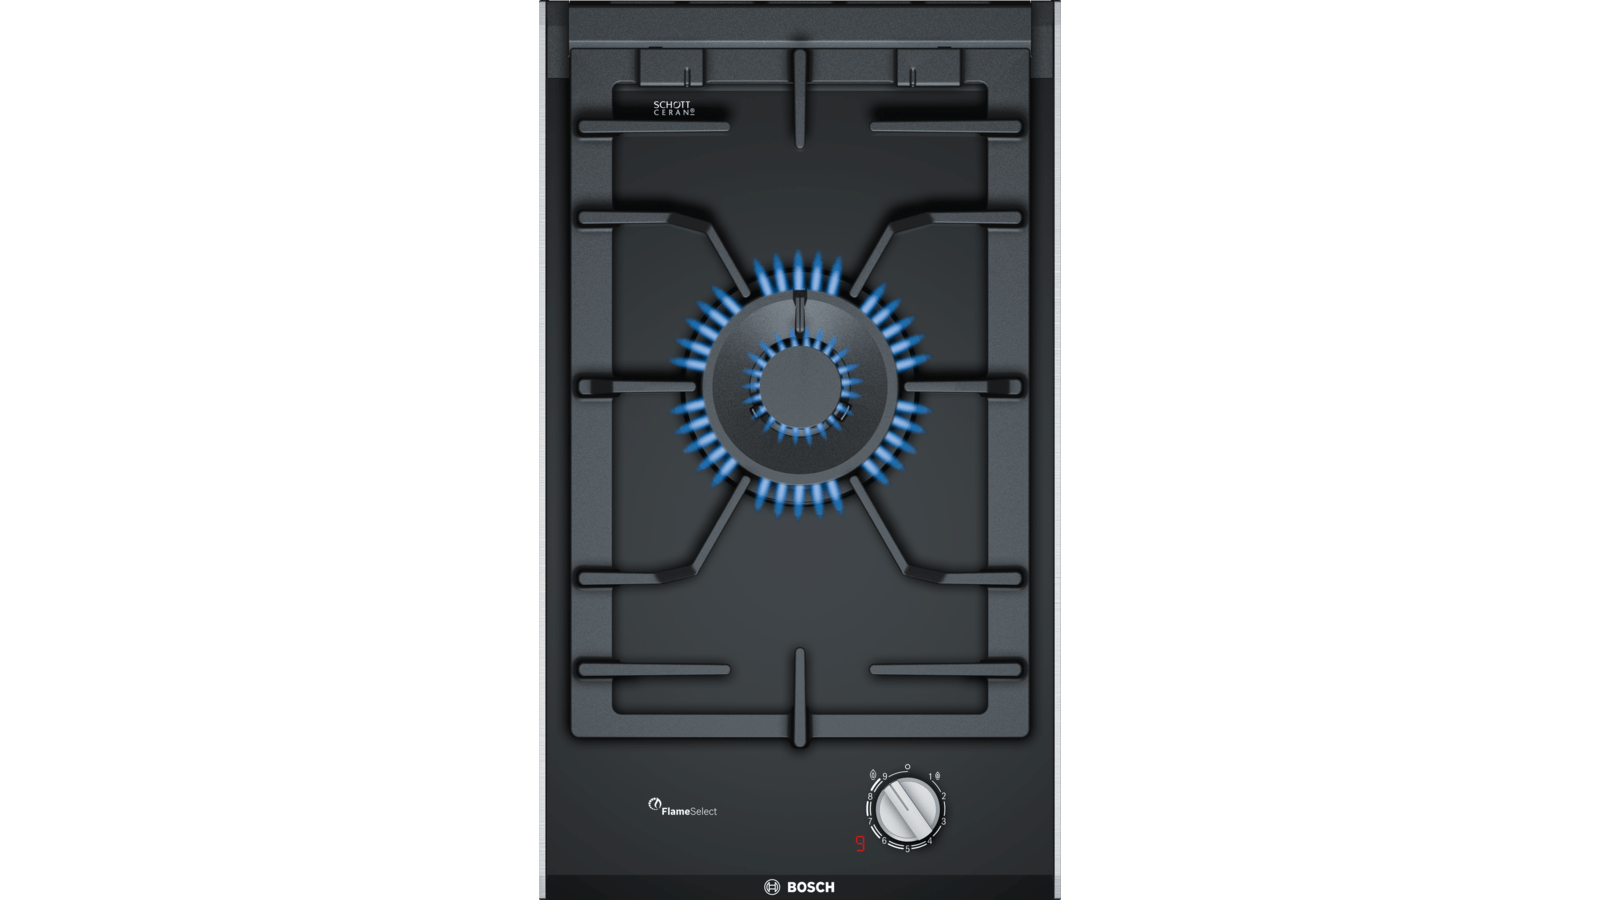 Placa Bosch Pra3a6d70 gas natural zona wok de 30.6 cm negro encimera vitrocerámica 1 30 modular 30cm quemador fuego tipo 8